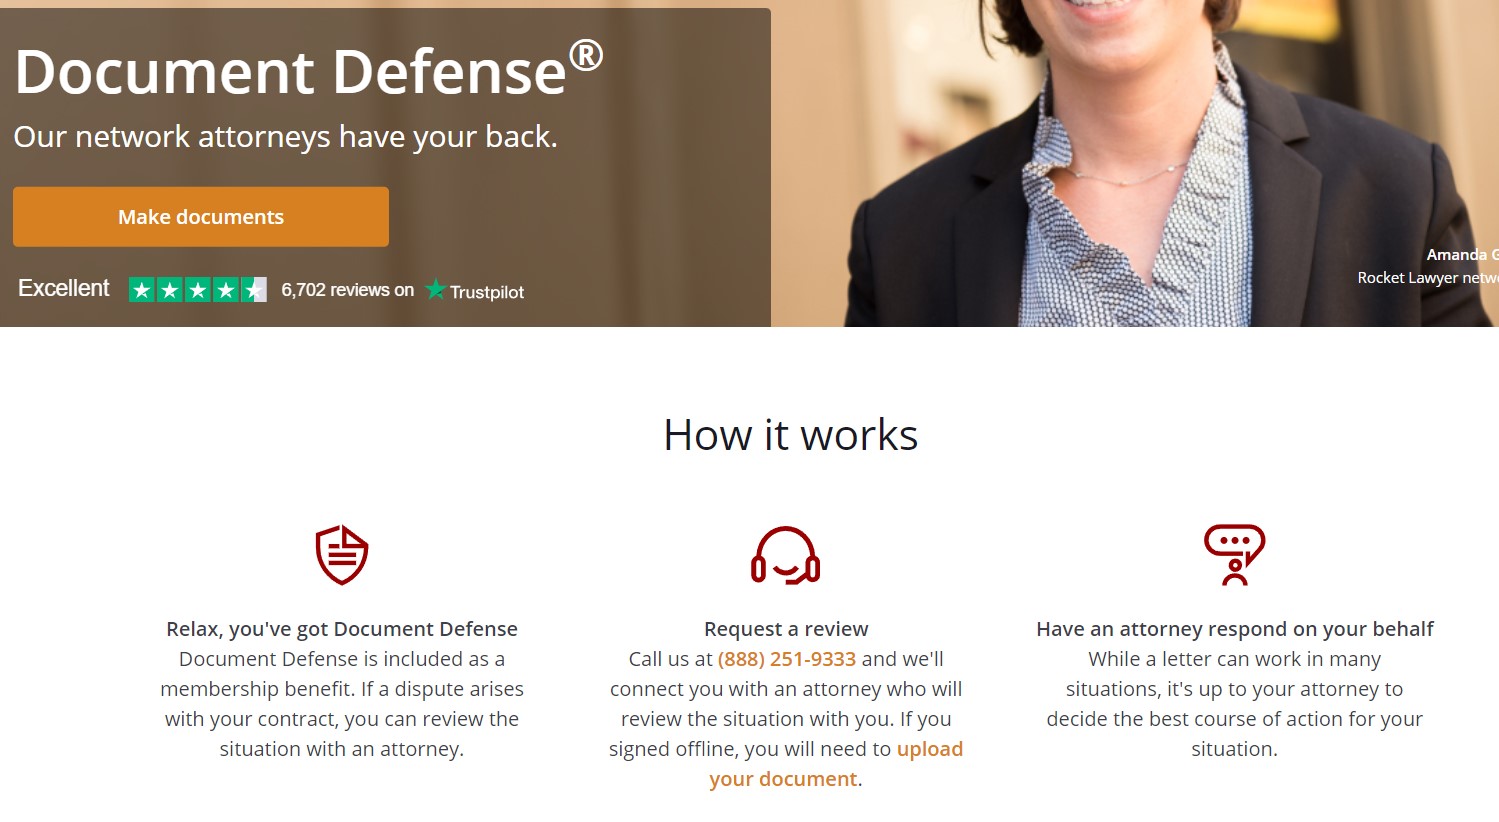 Rocket Lawyer Document Defense® features